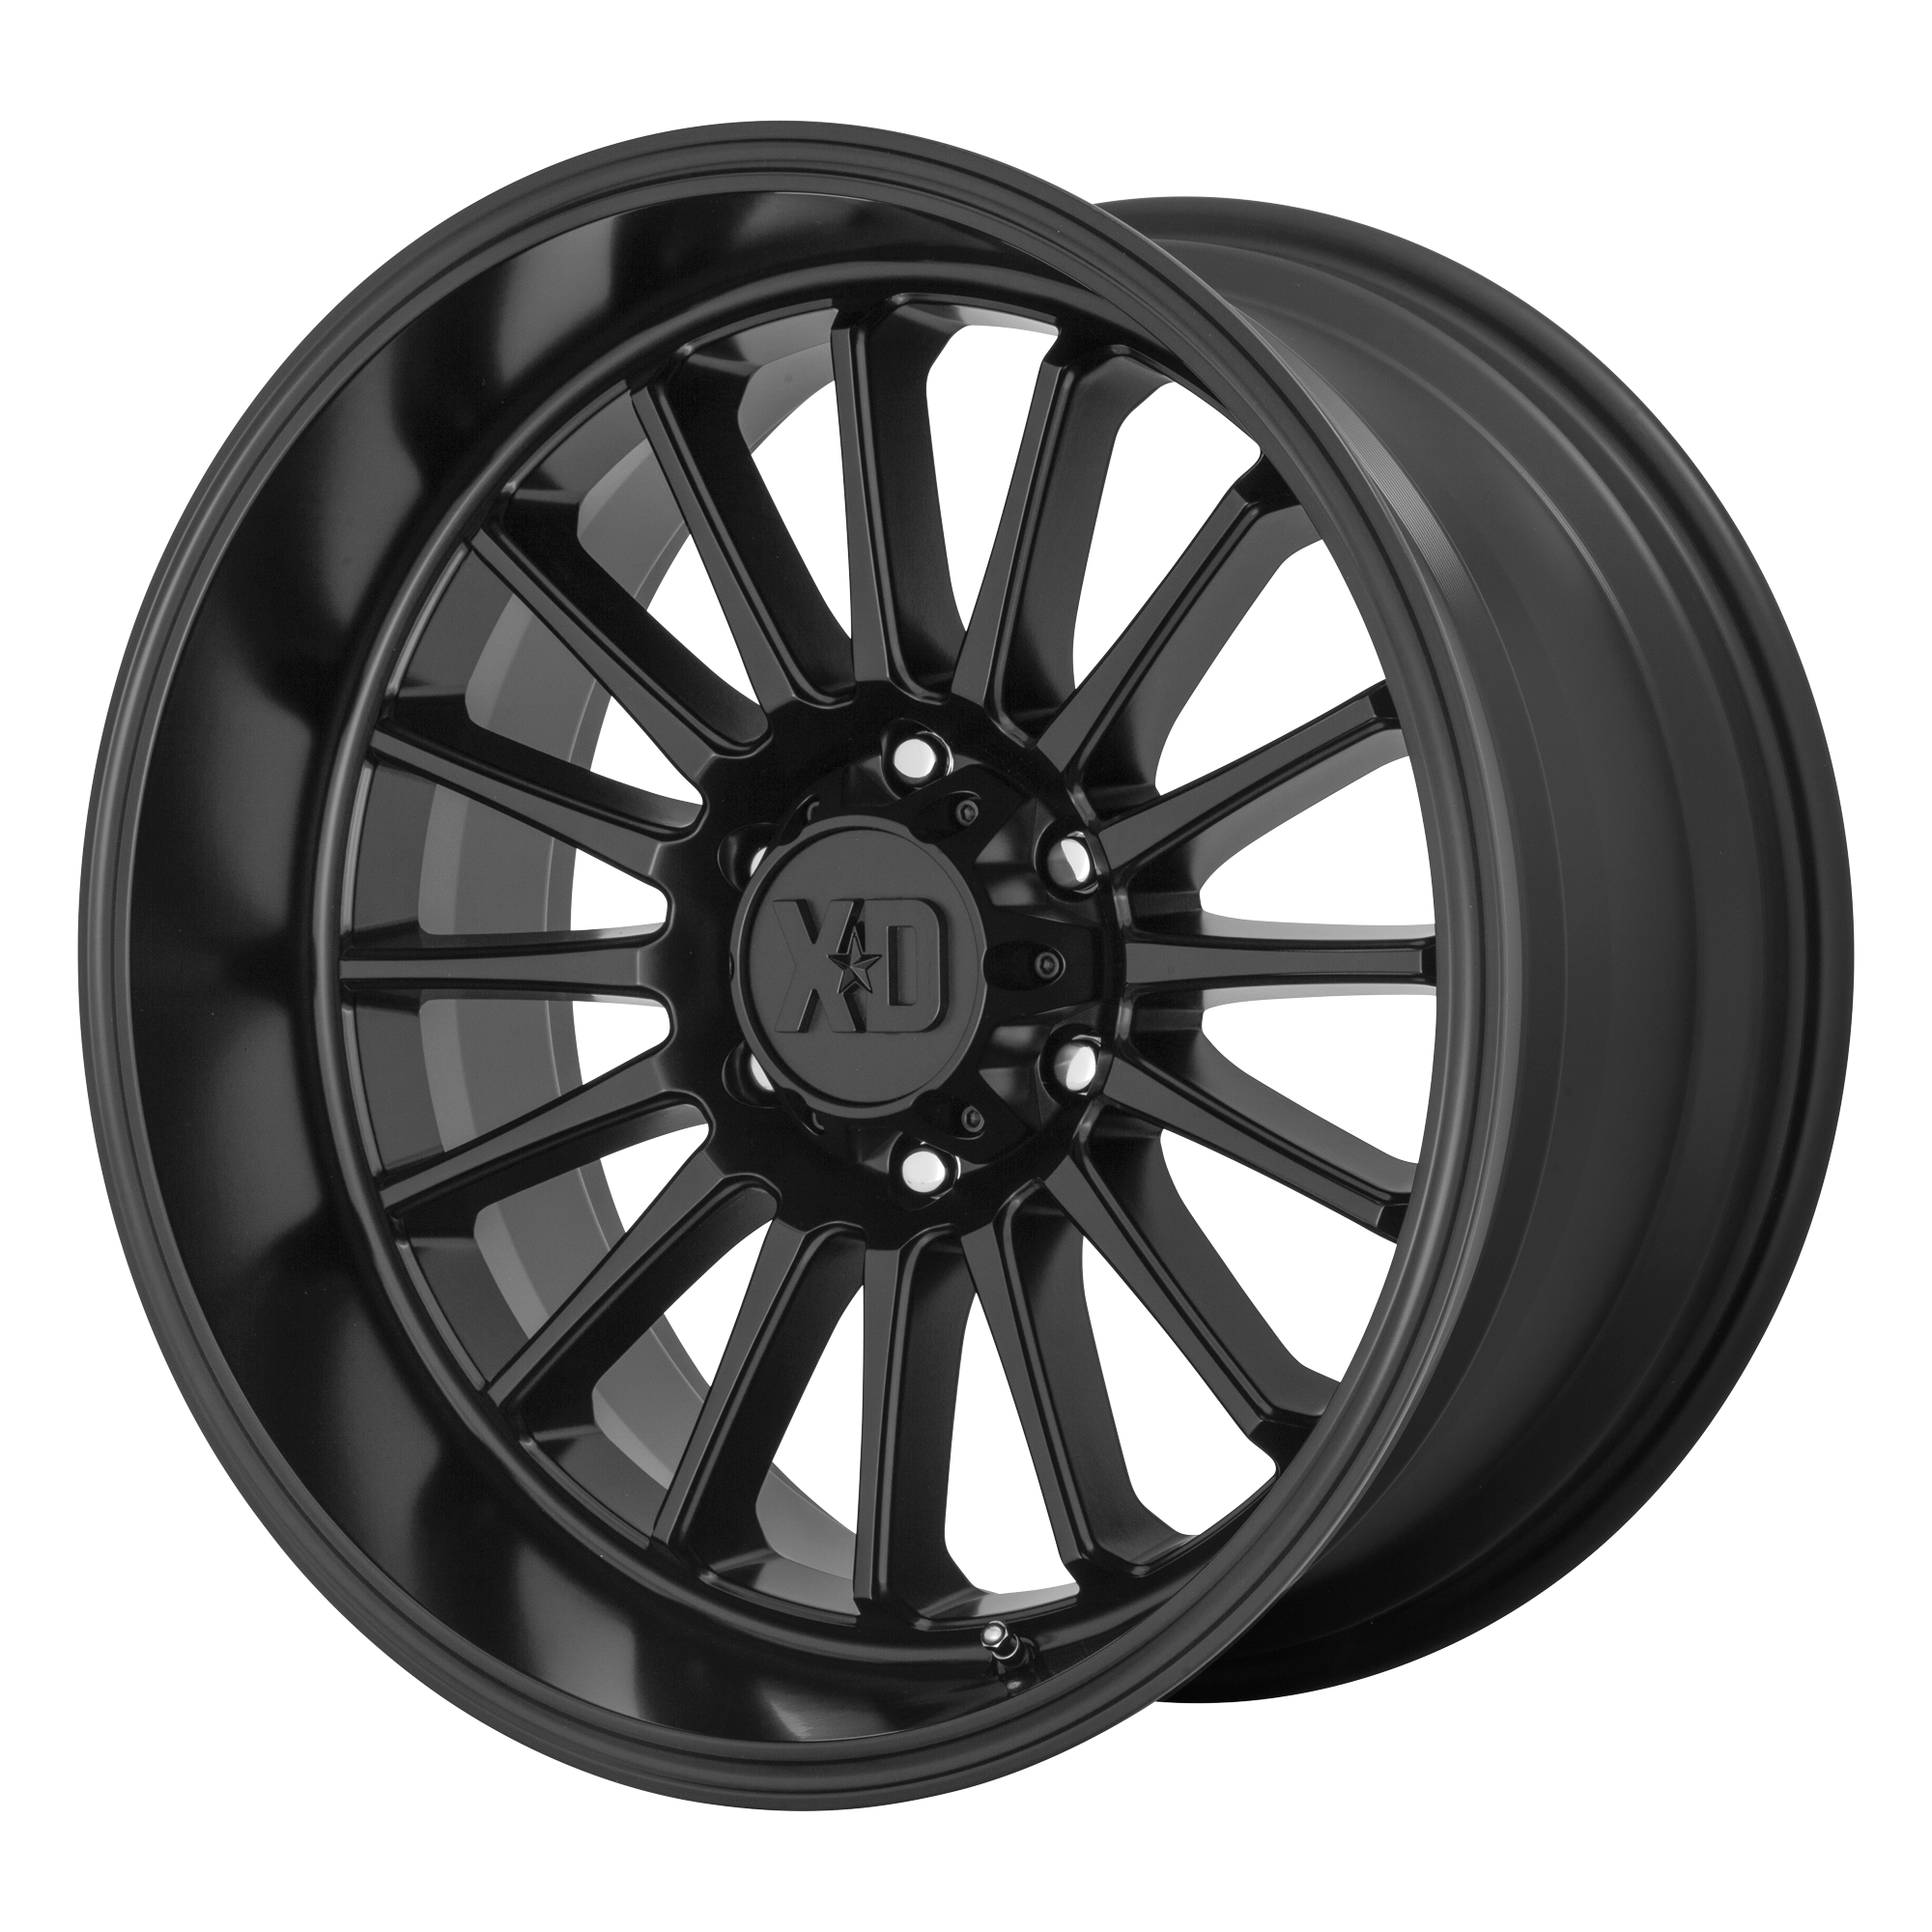 XD 20"x9" Non-Chrome Satin Black Custom Wheel ARSWCWXD85729085700